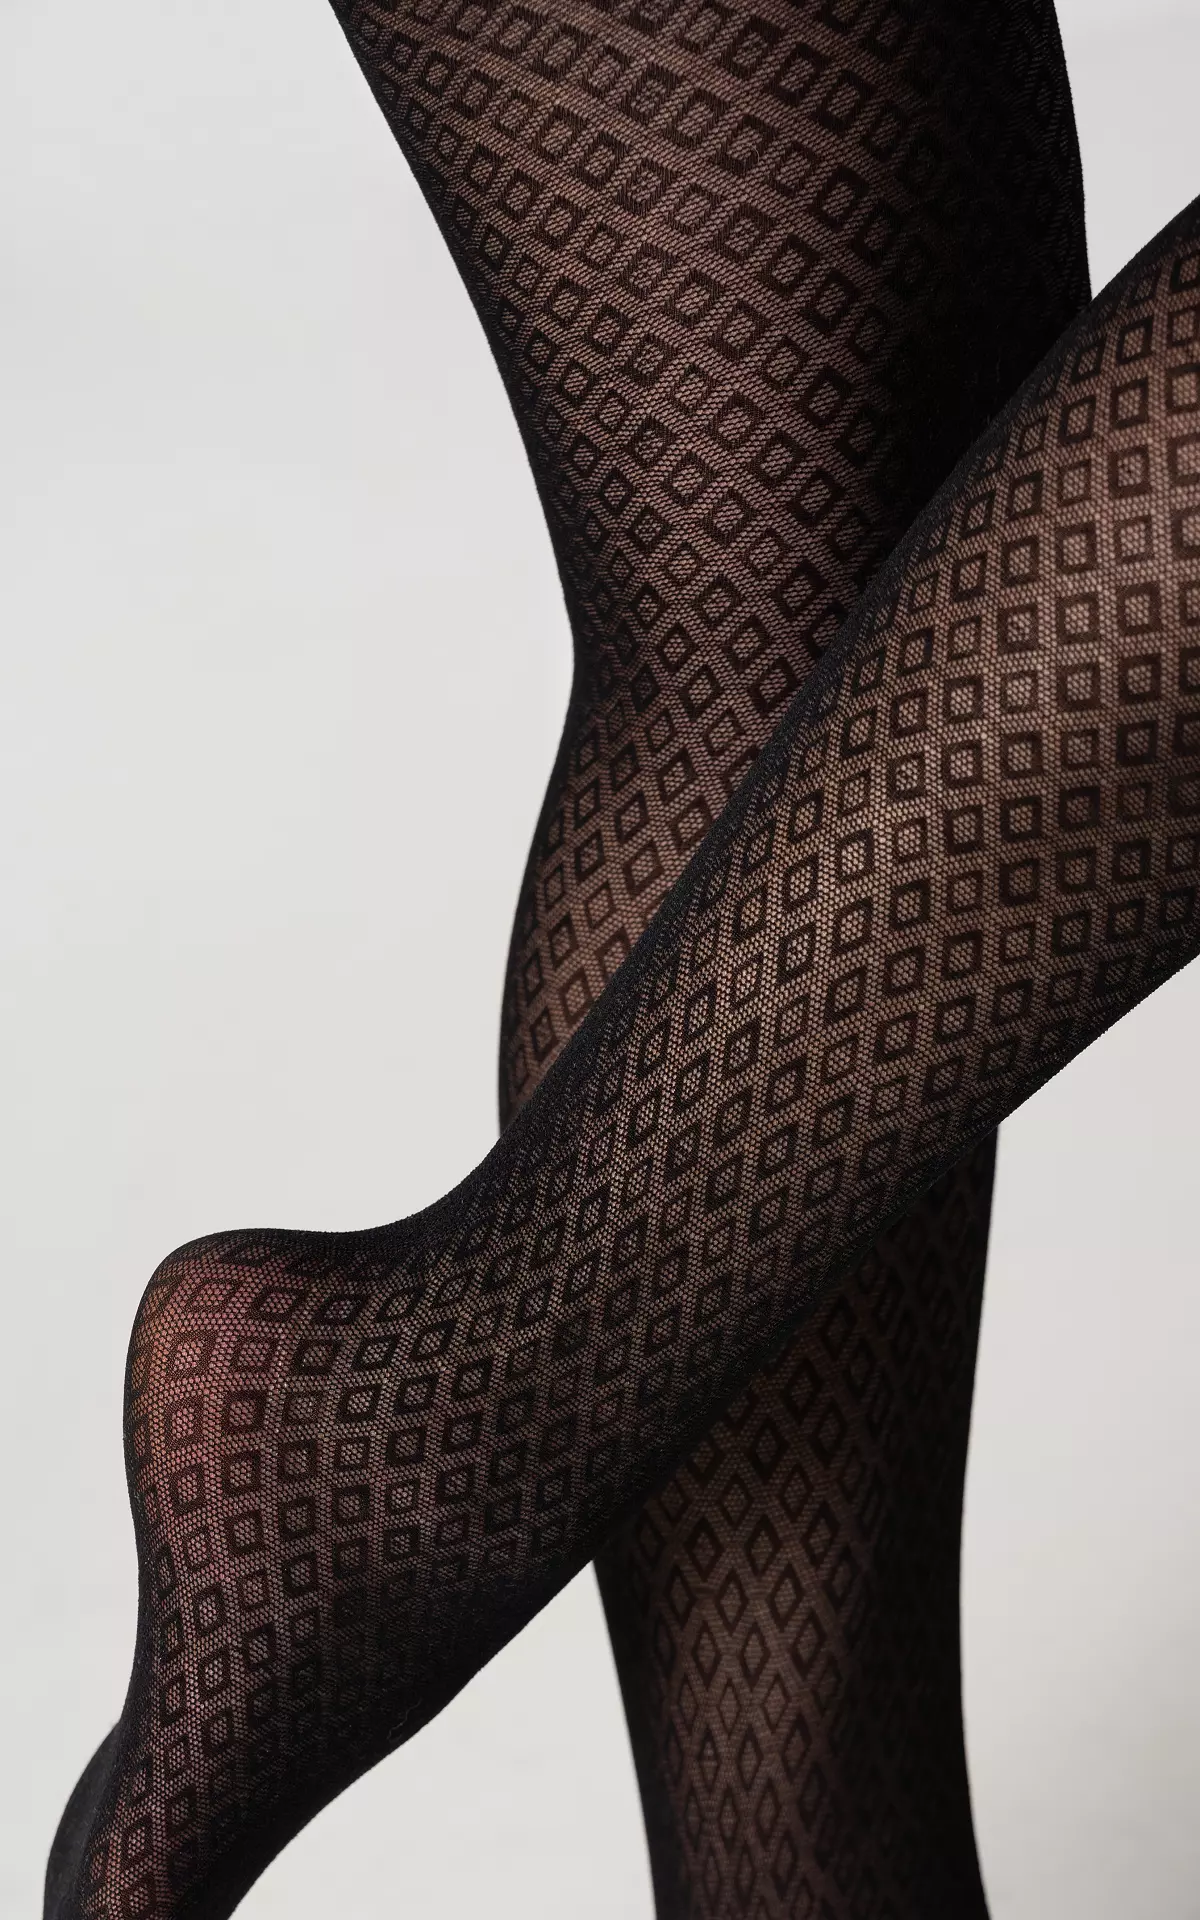 25 DEN Striped tights - Black, Guts & Gusto